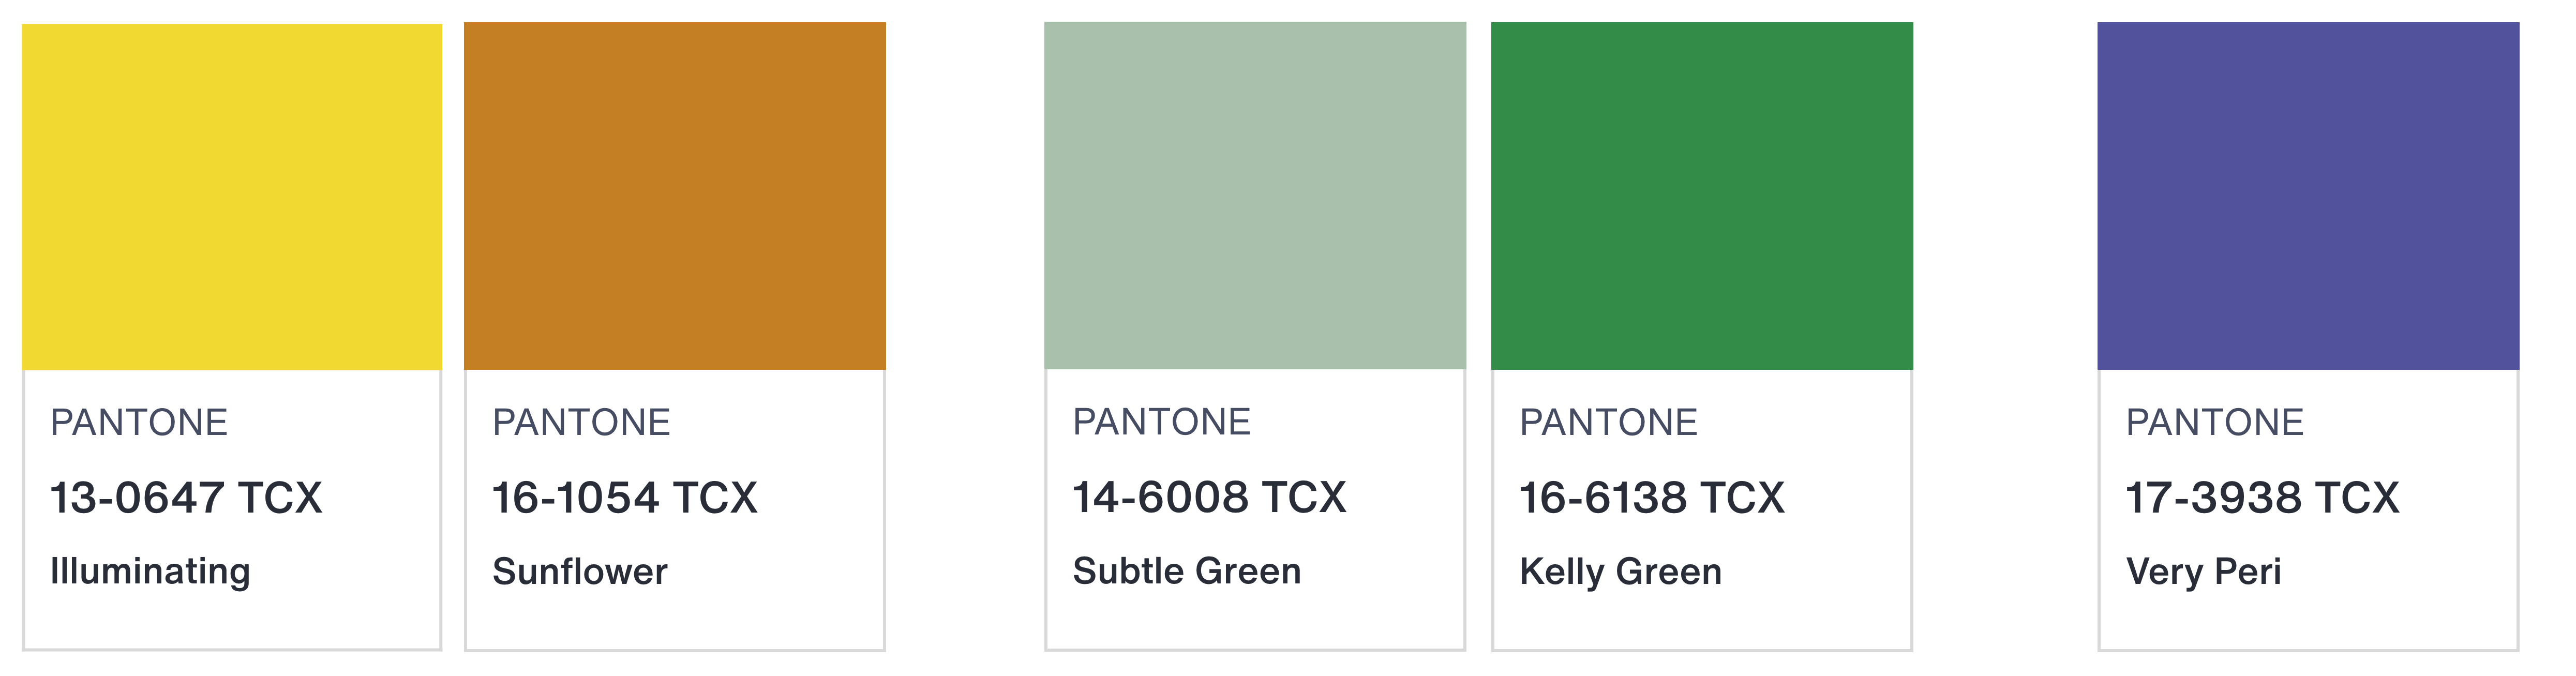 kelly green pantone coated